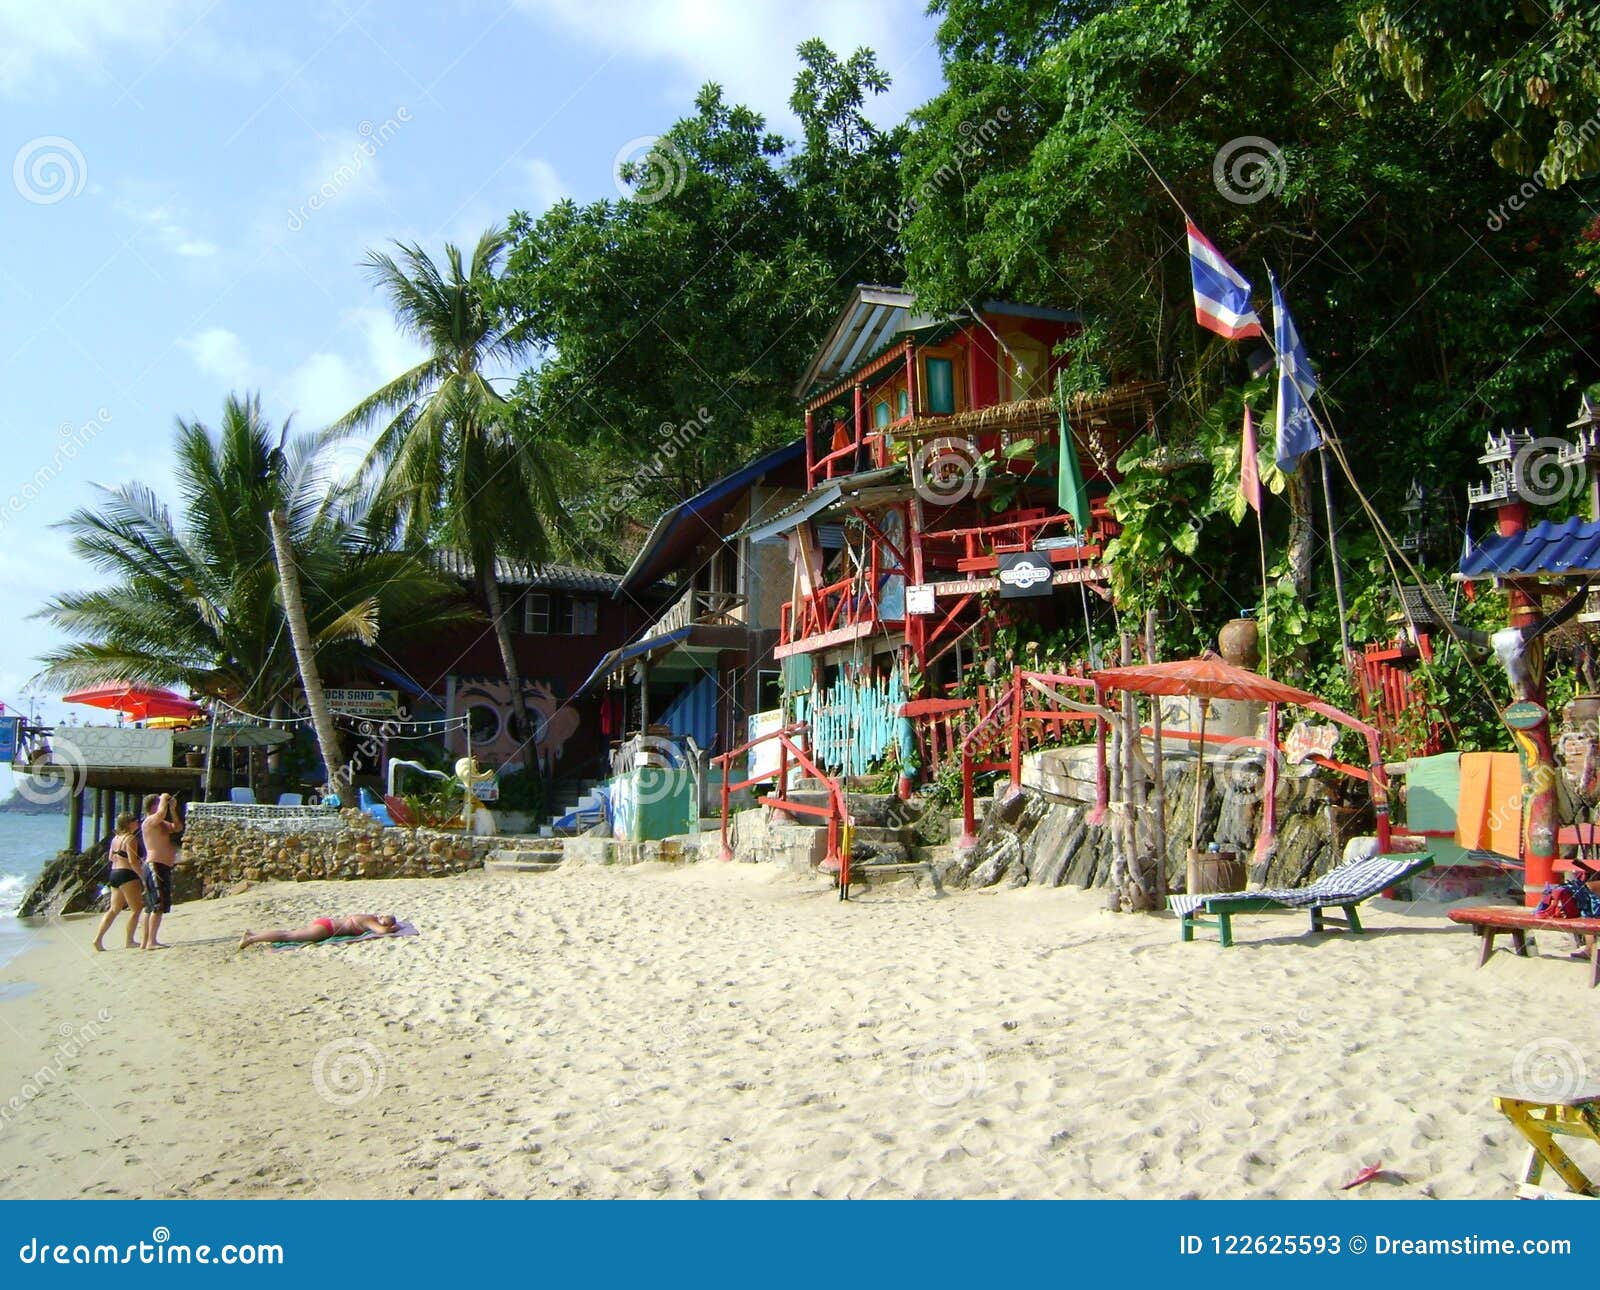 Thailand Tropical Sand Beach Hut With Clourful Furniture Trees